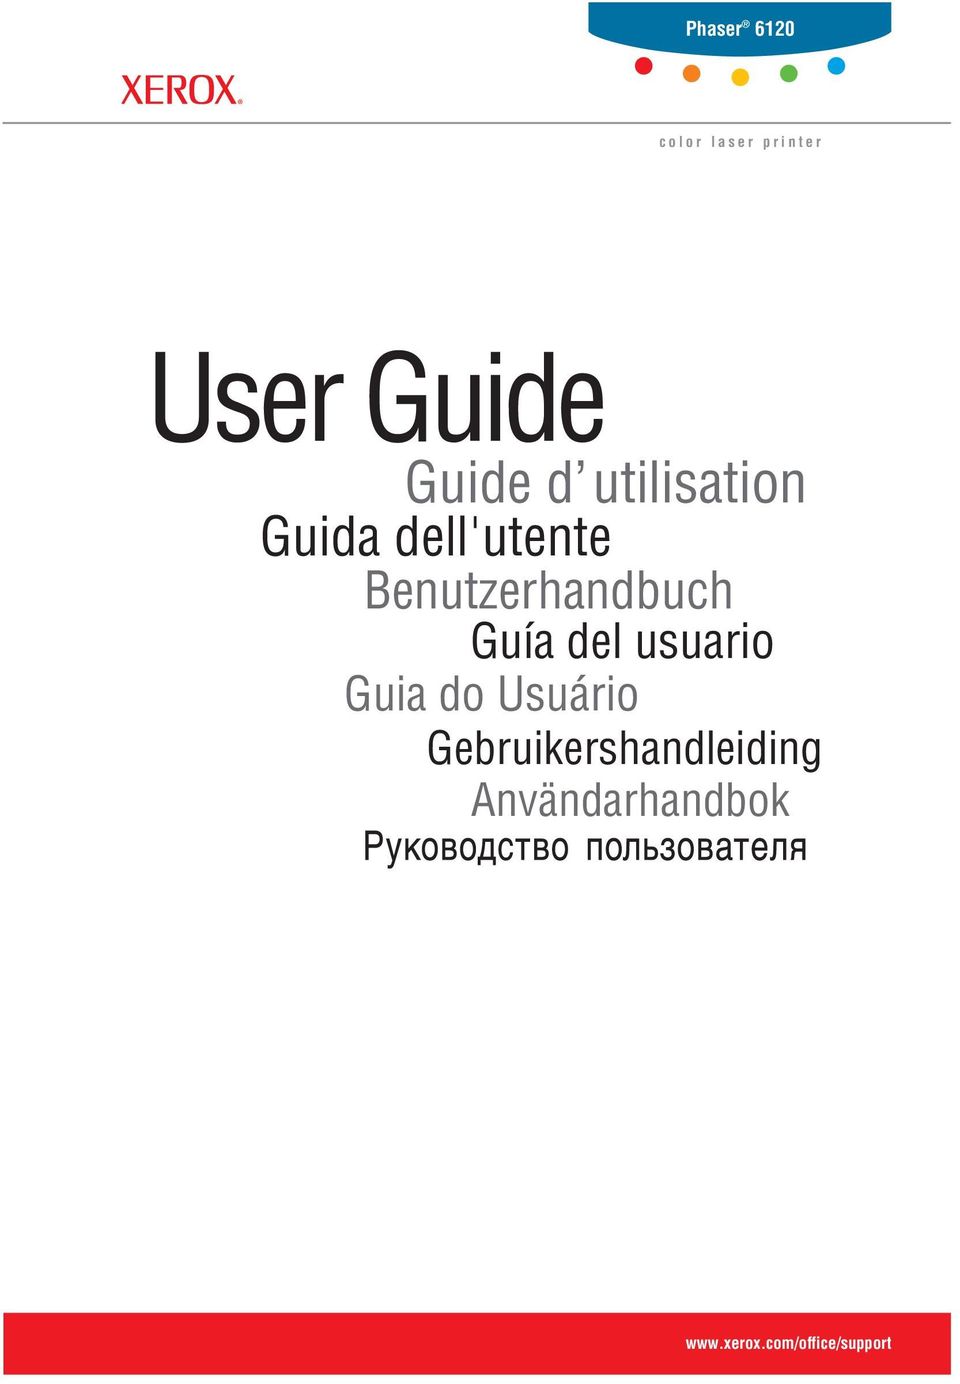 Guía del usuario Guia do Usuário